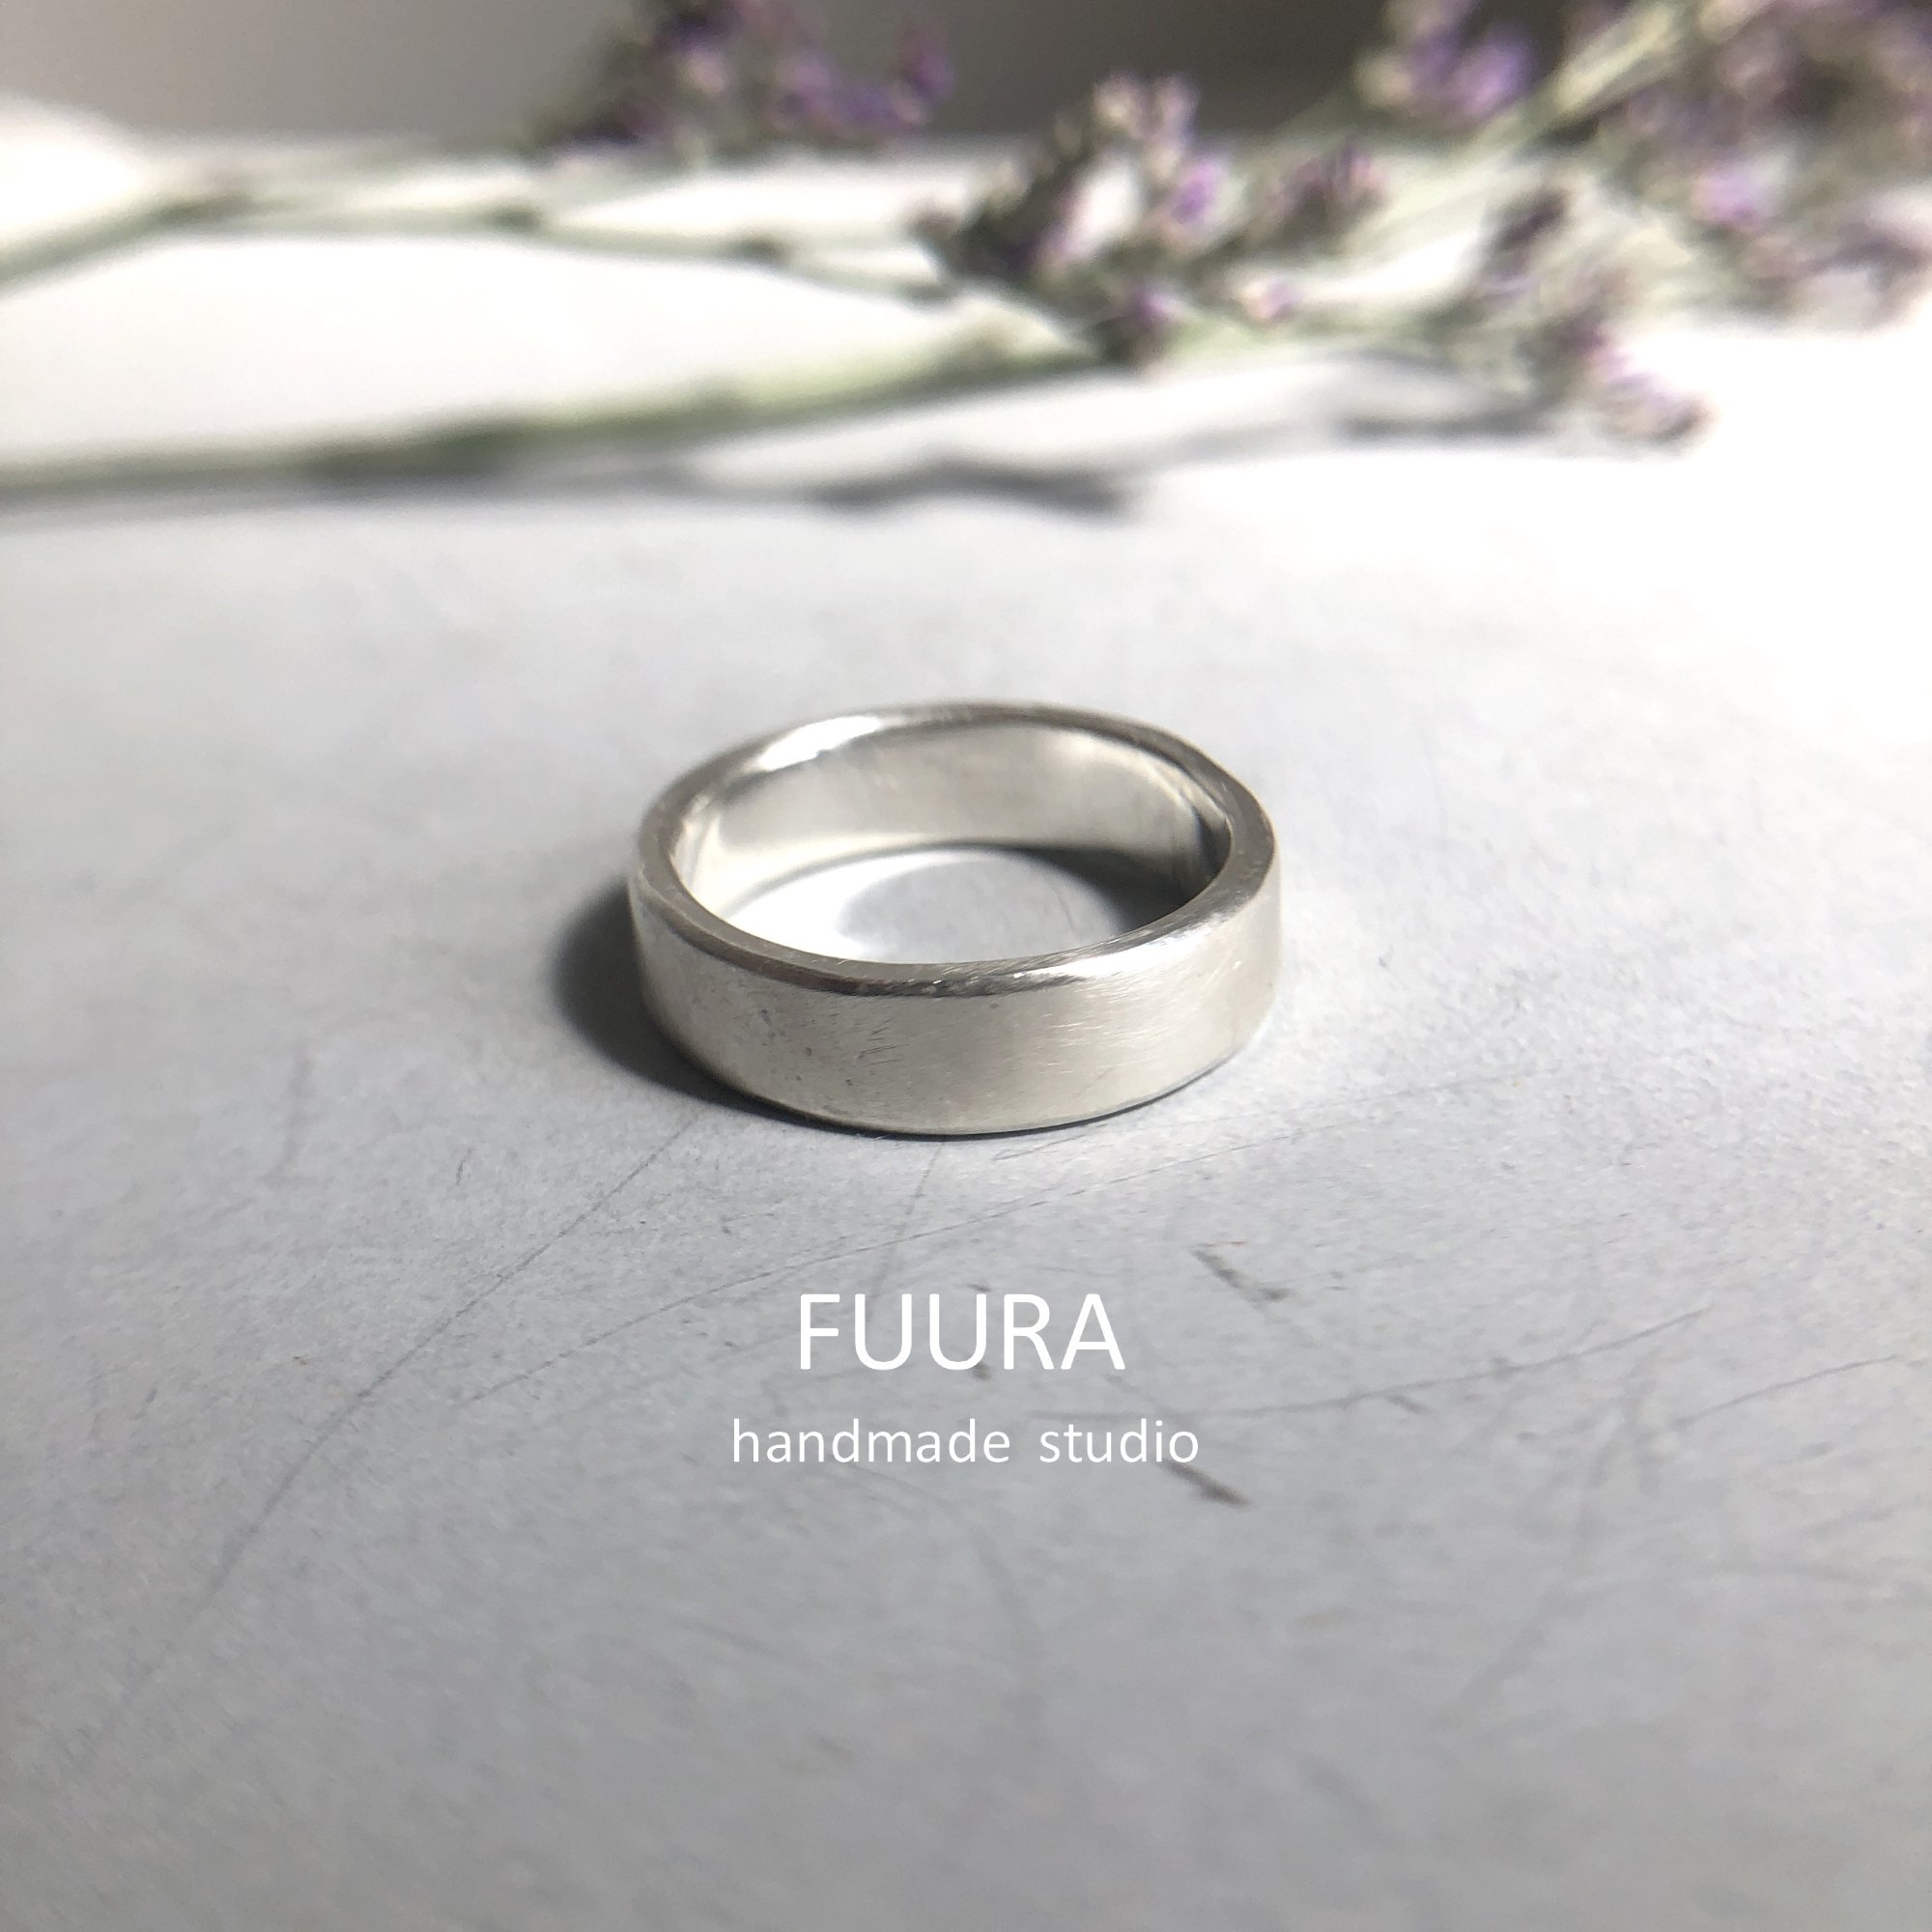 mat ring silver 5mm / マットリング シルバー 5mm - FUURA handmade studio